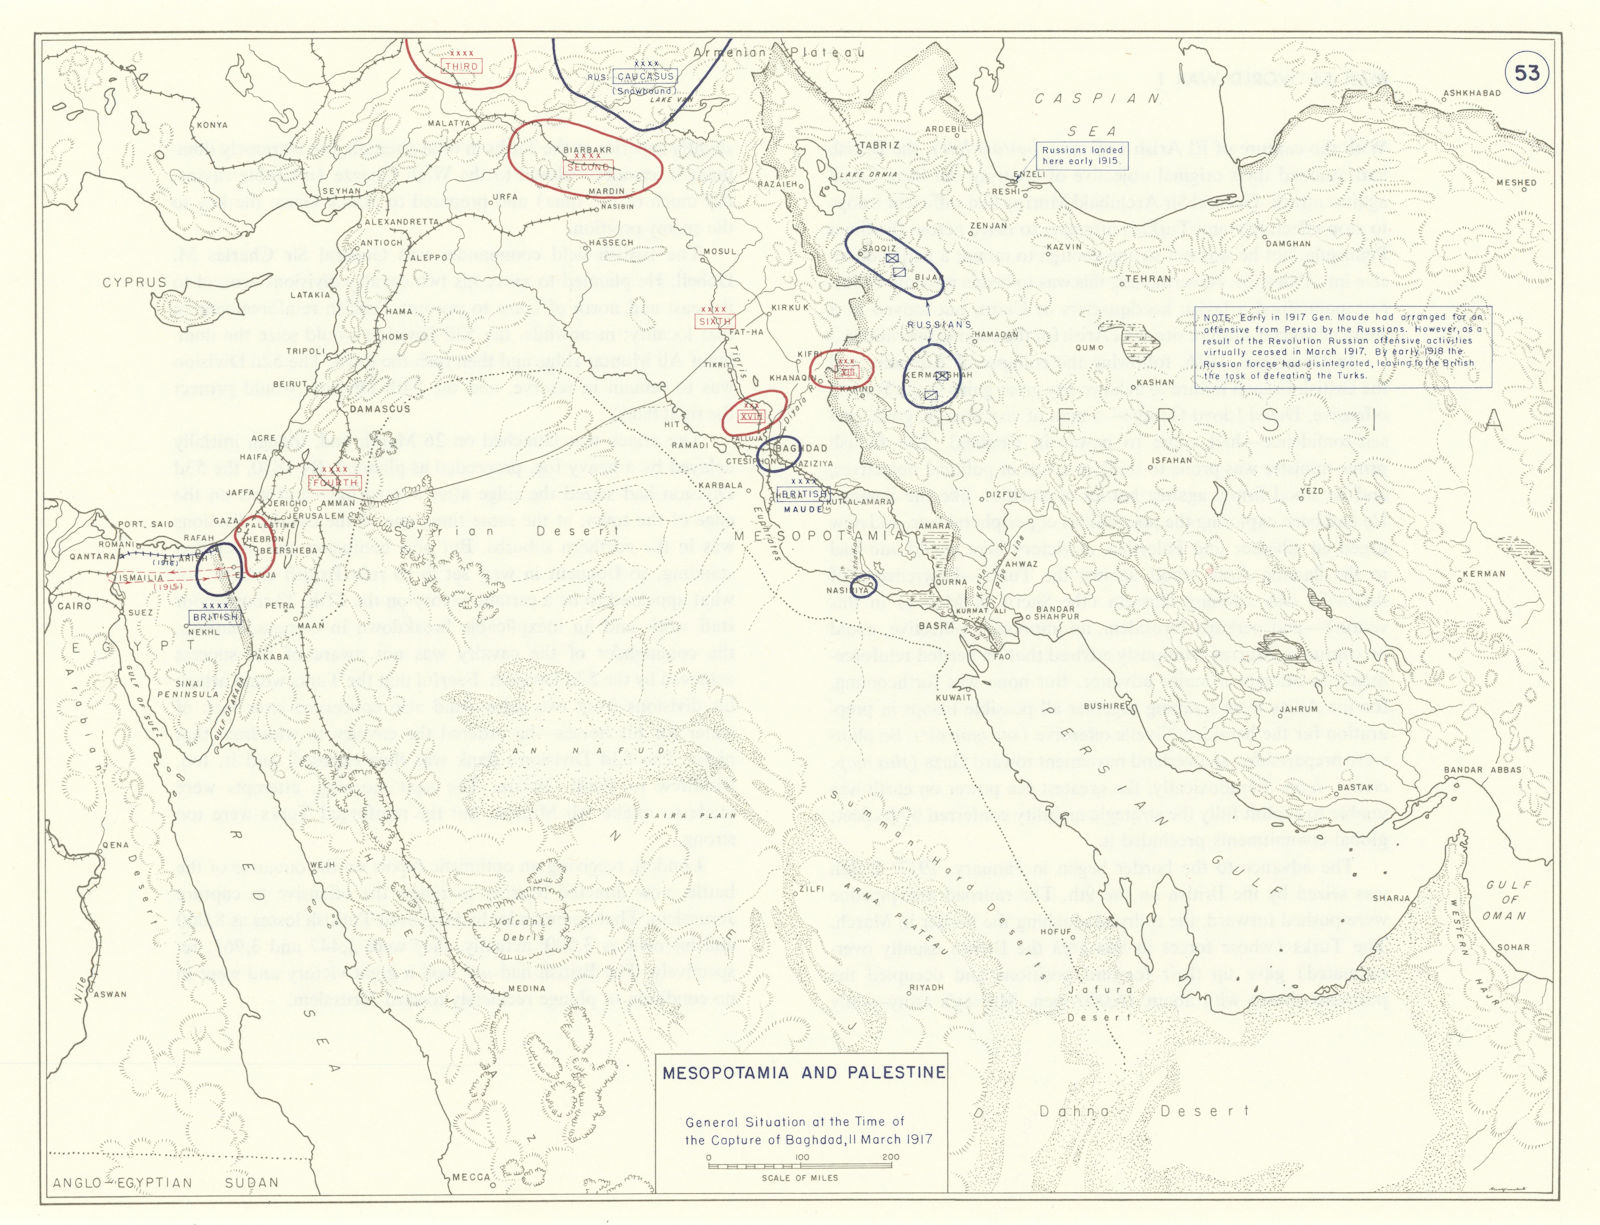 World War 1 Mesopotamia Palestine March 1917 Capture of Baghdad. Iraq 1959 map